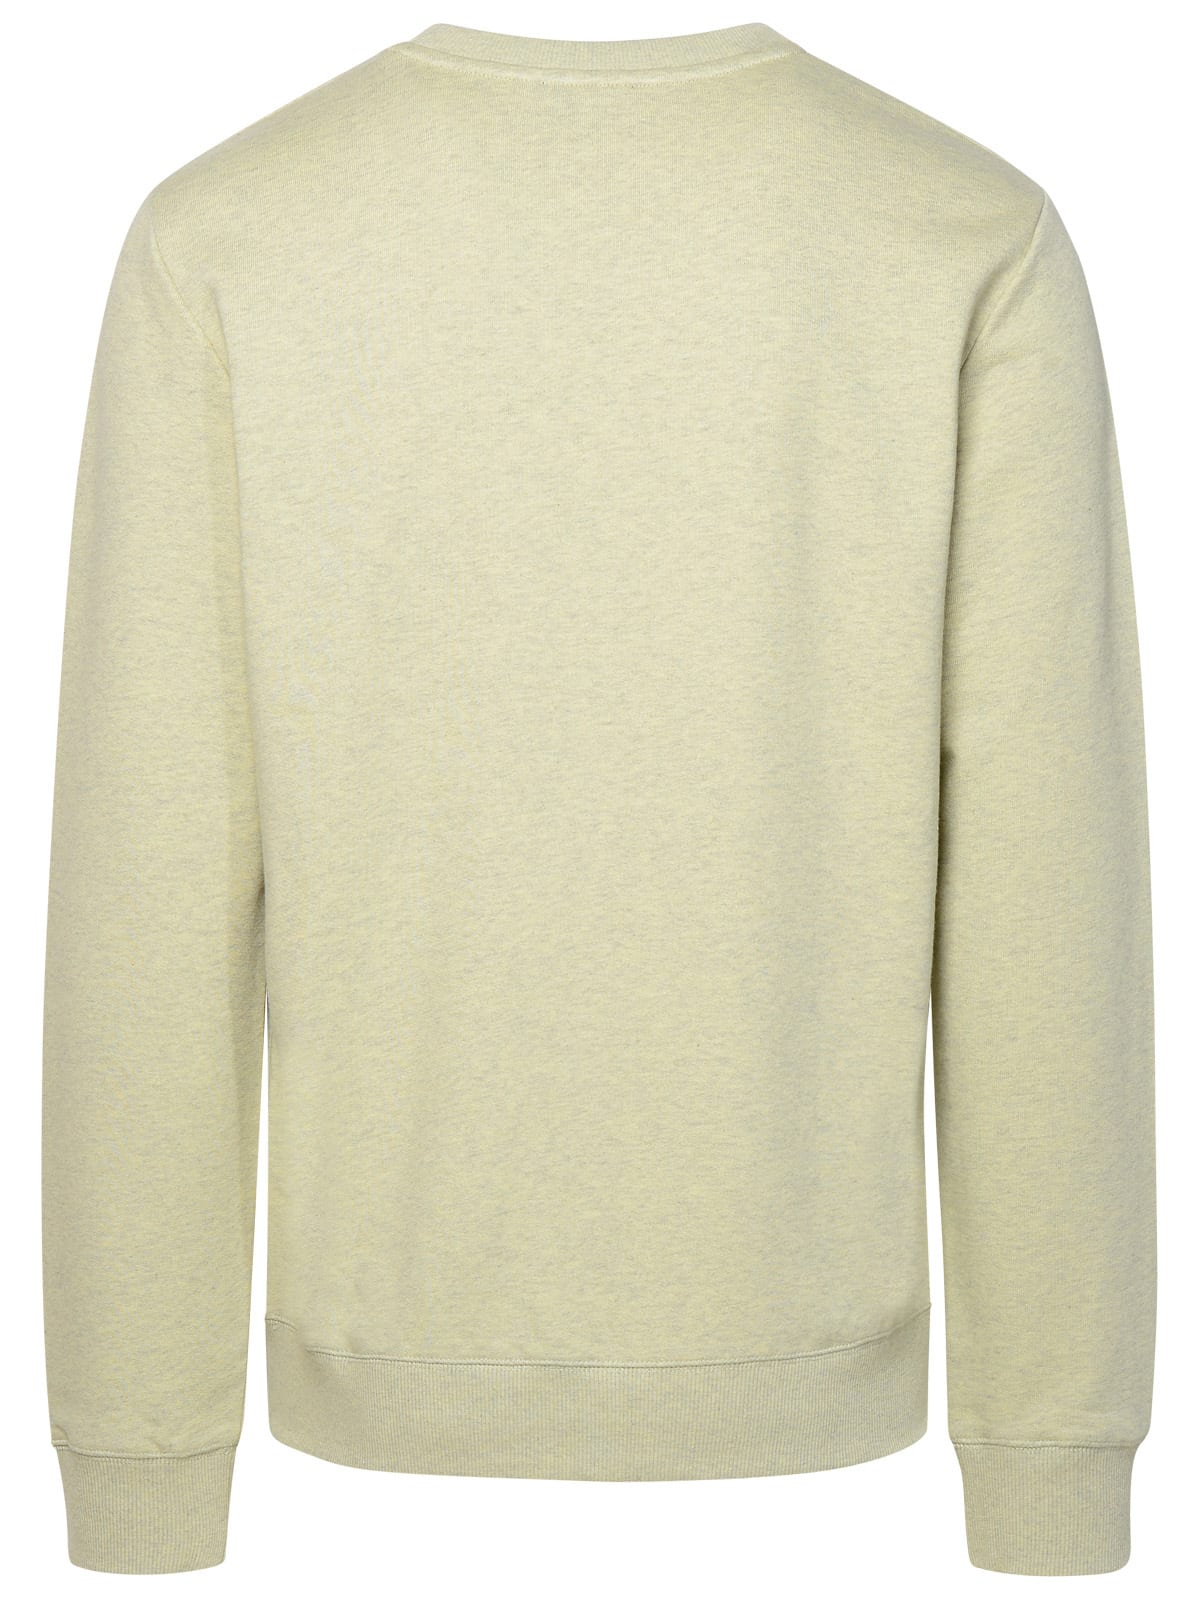 Shop Apc Green Cotton Sweatshirt